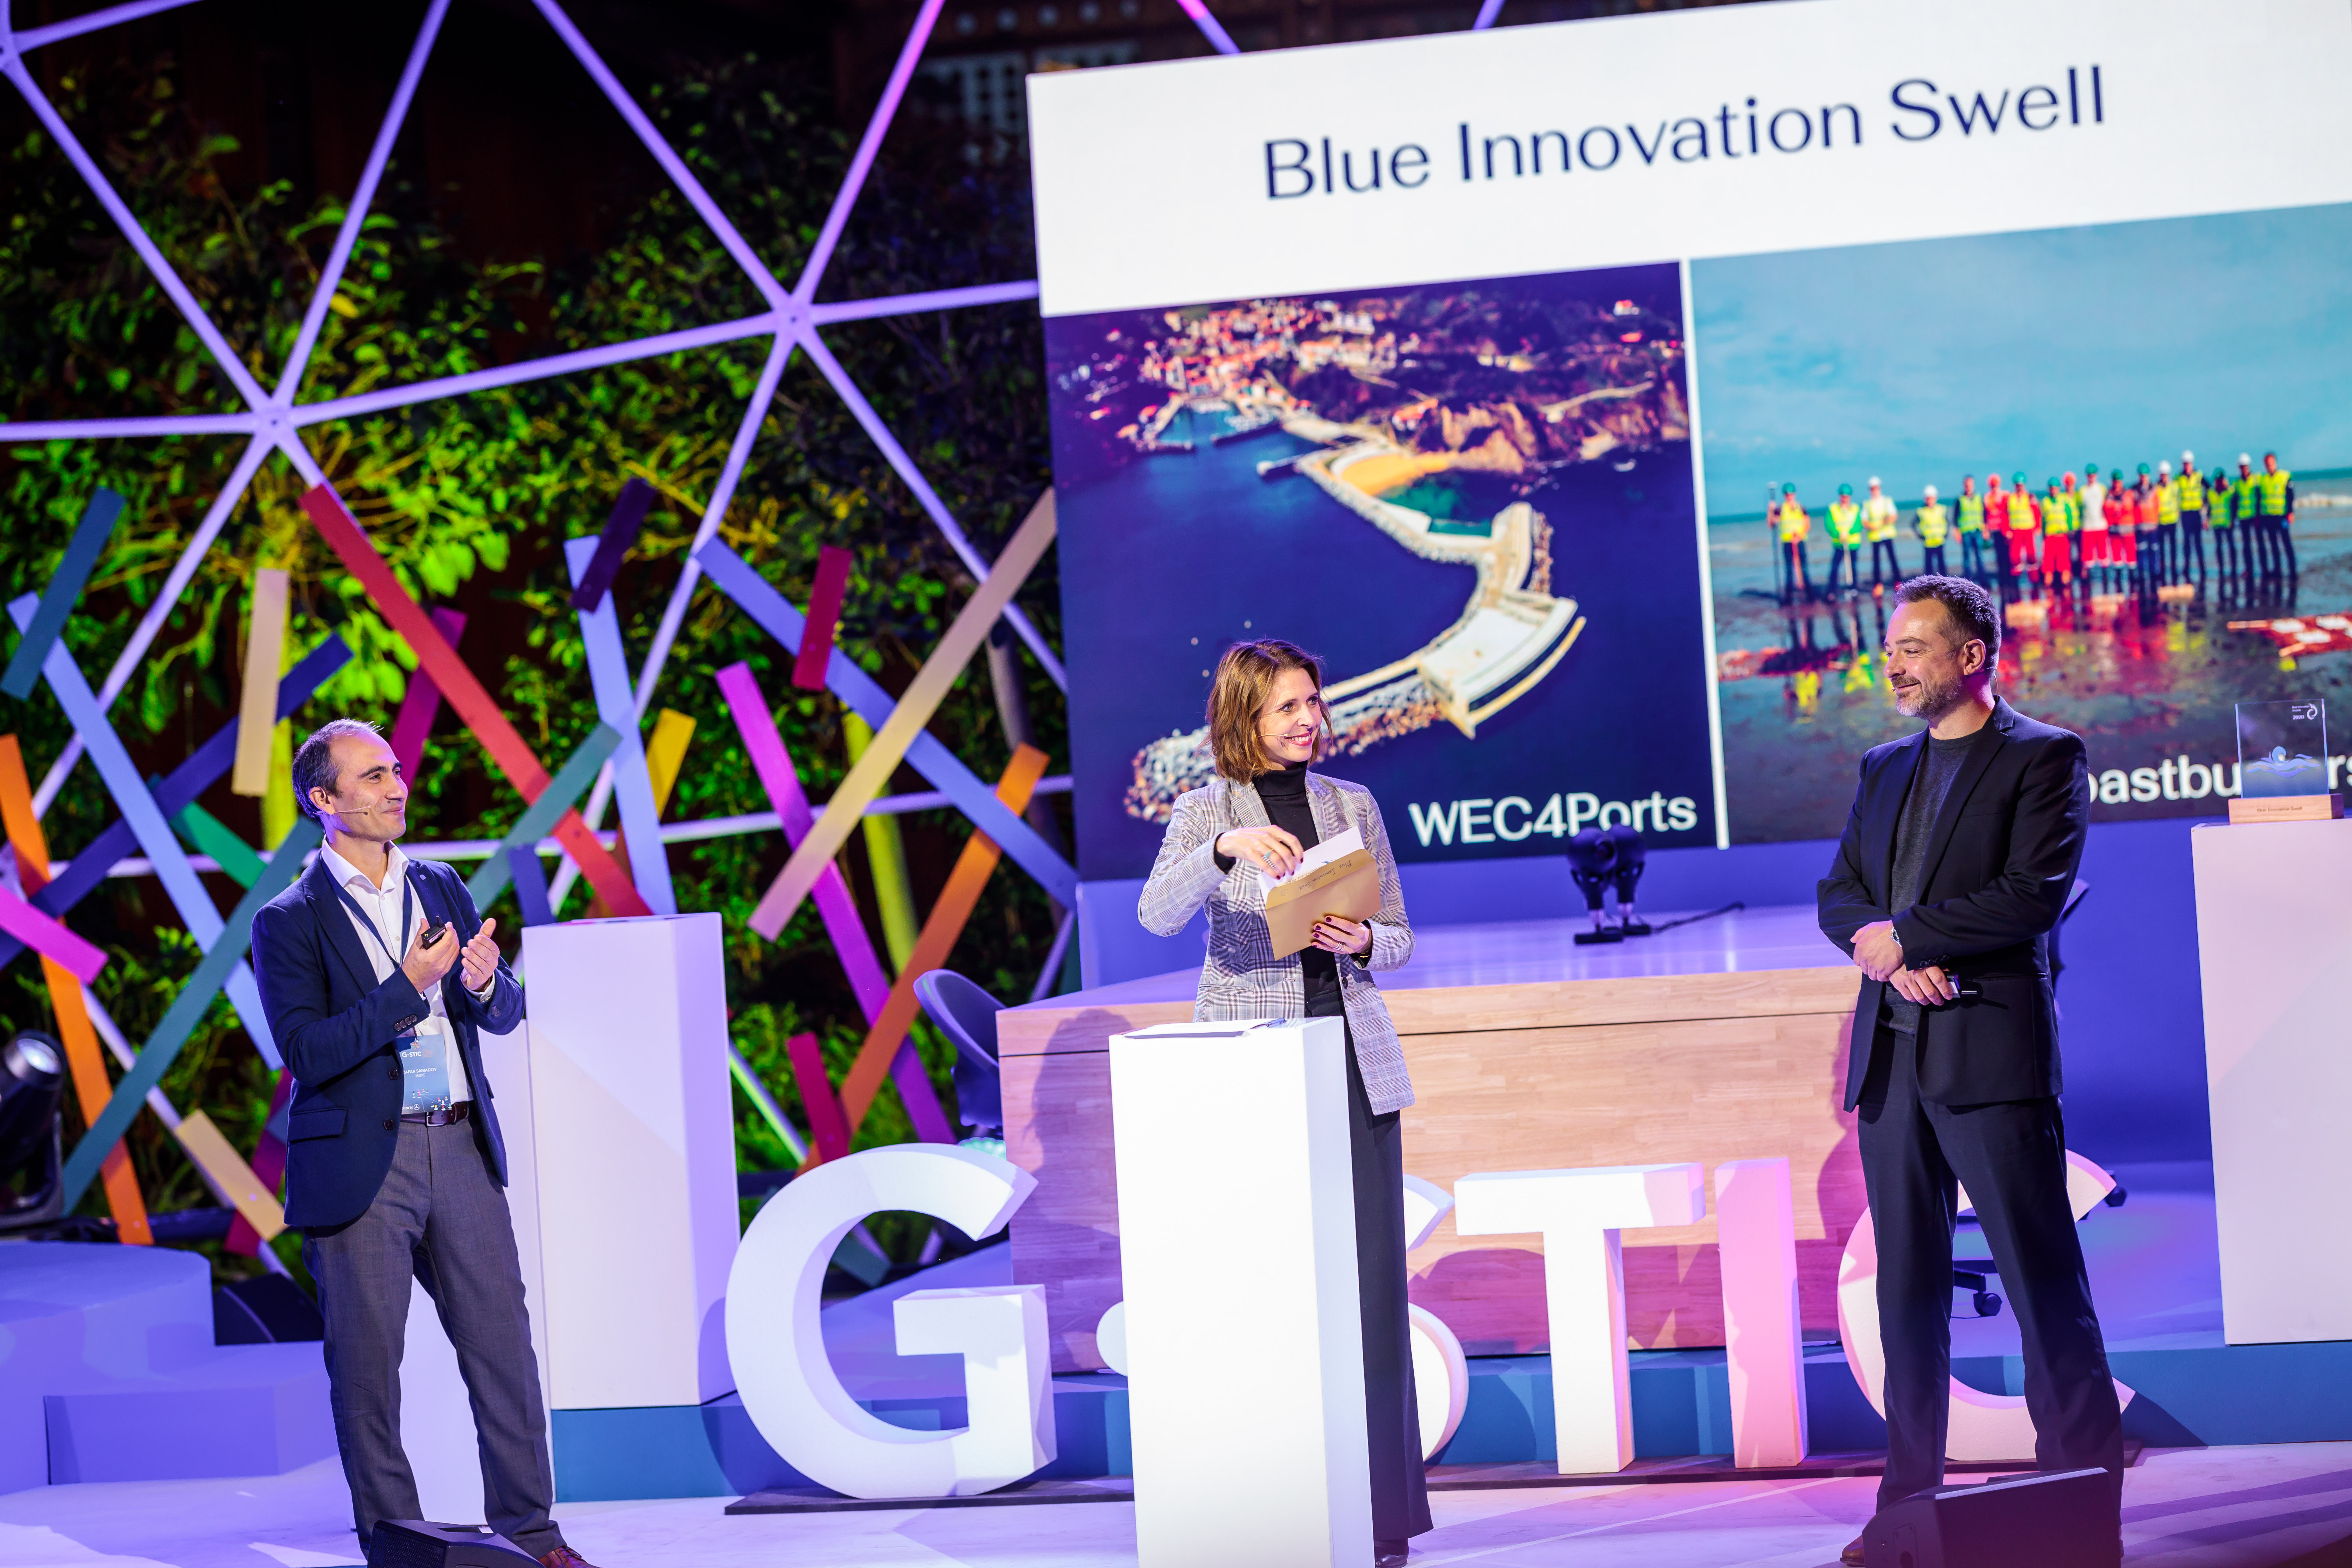 Национальная премия контента. Blue Innovation. Quality Innovation Award 2020. Innovation Awards.